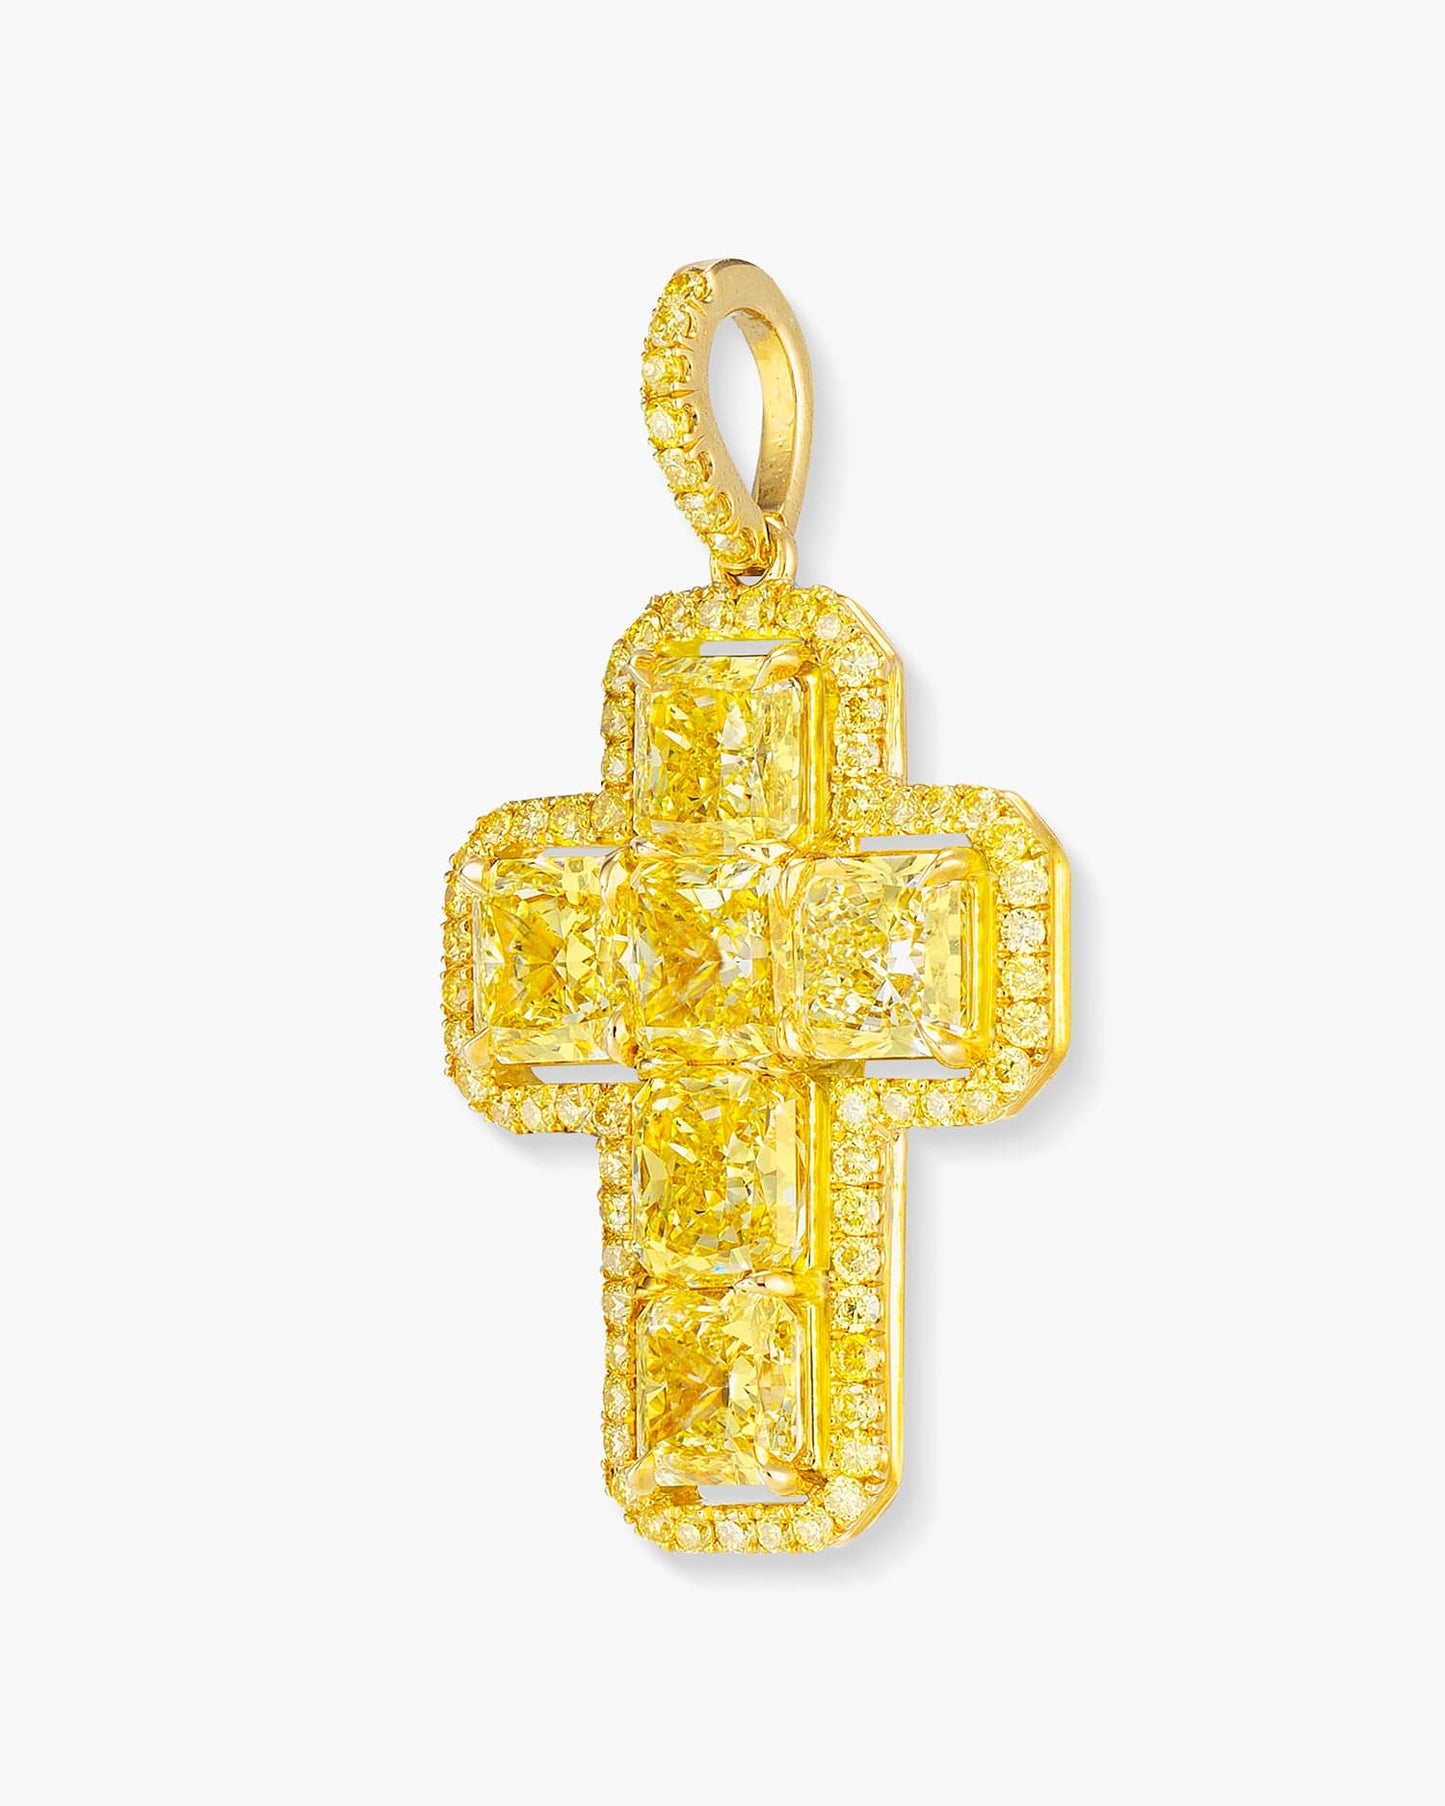 Radiant Cut Yellow Diamond Cross Pendant Necklace, 3.41 carats